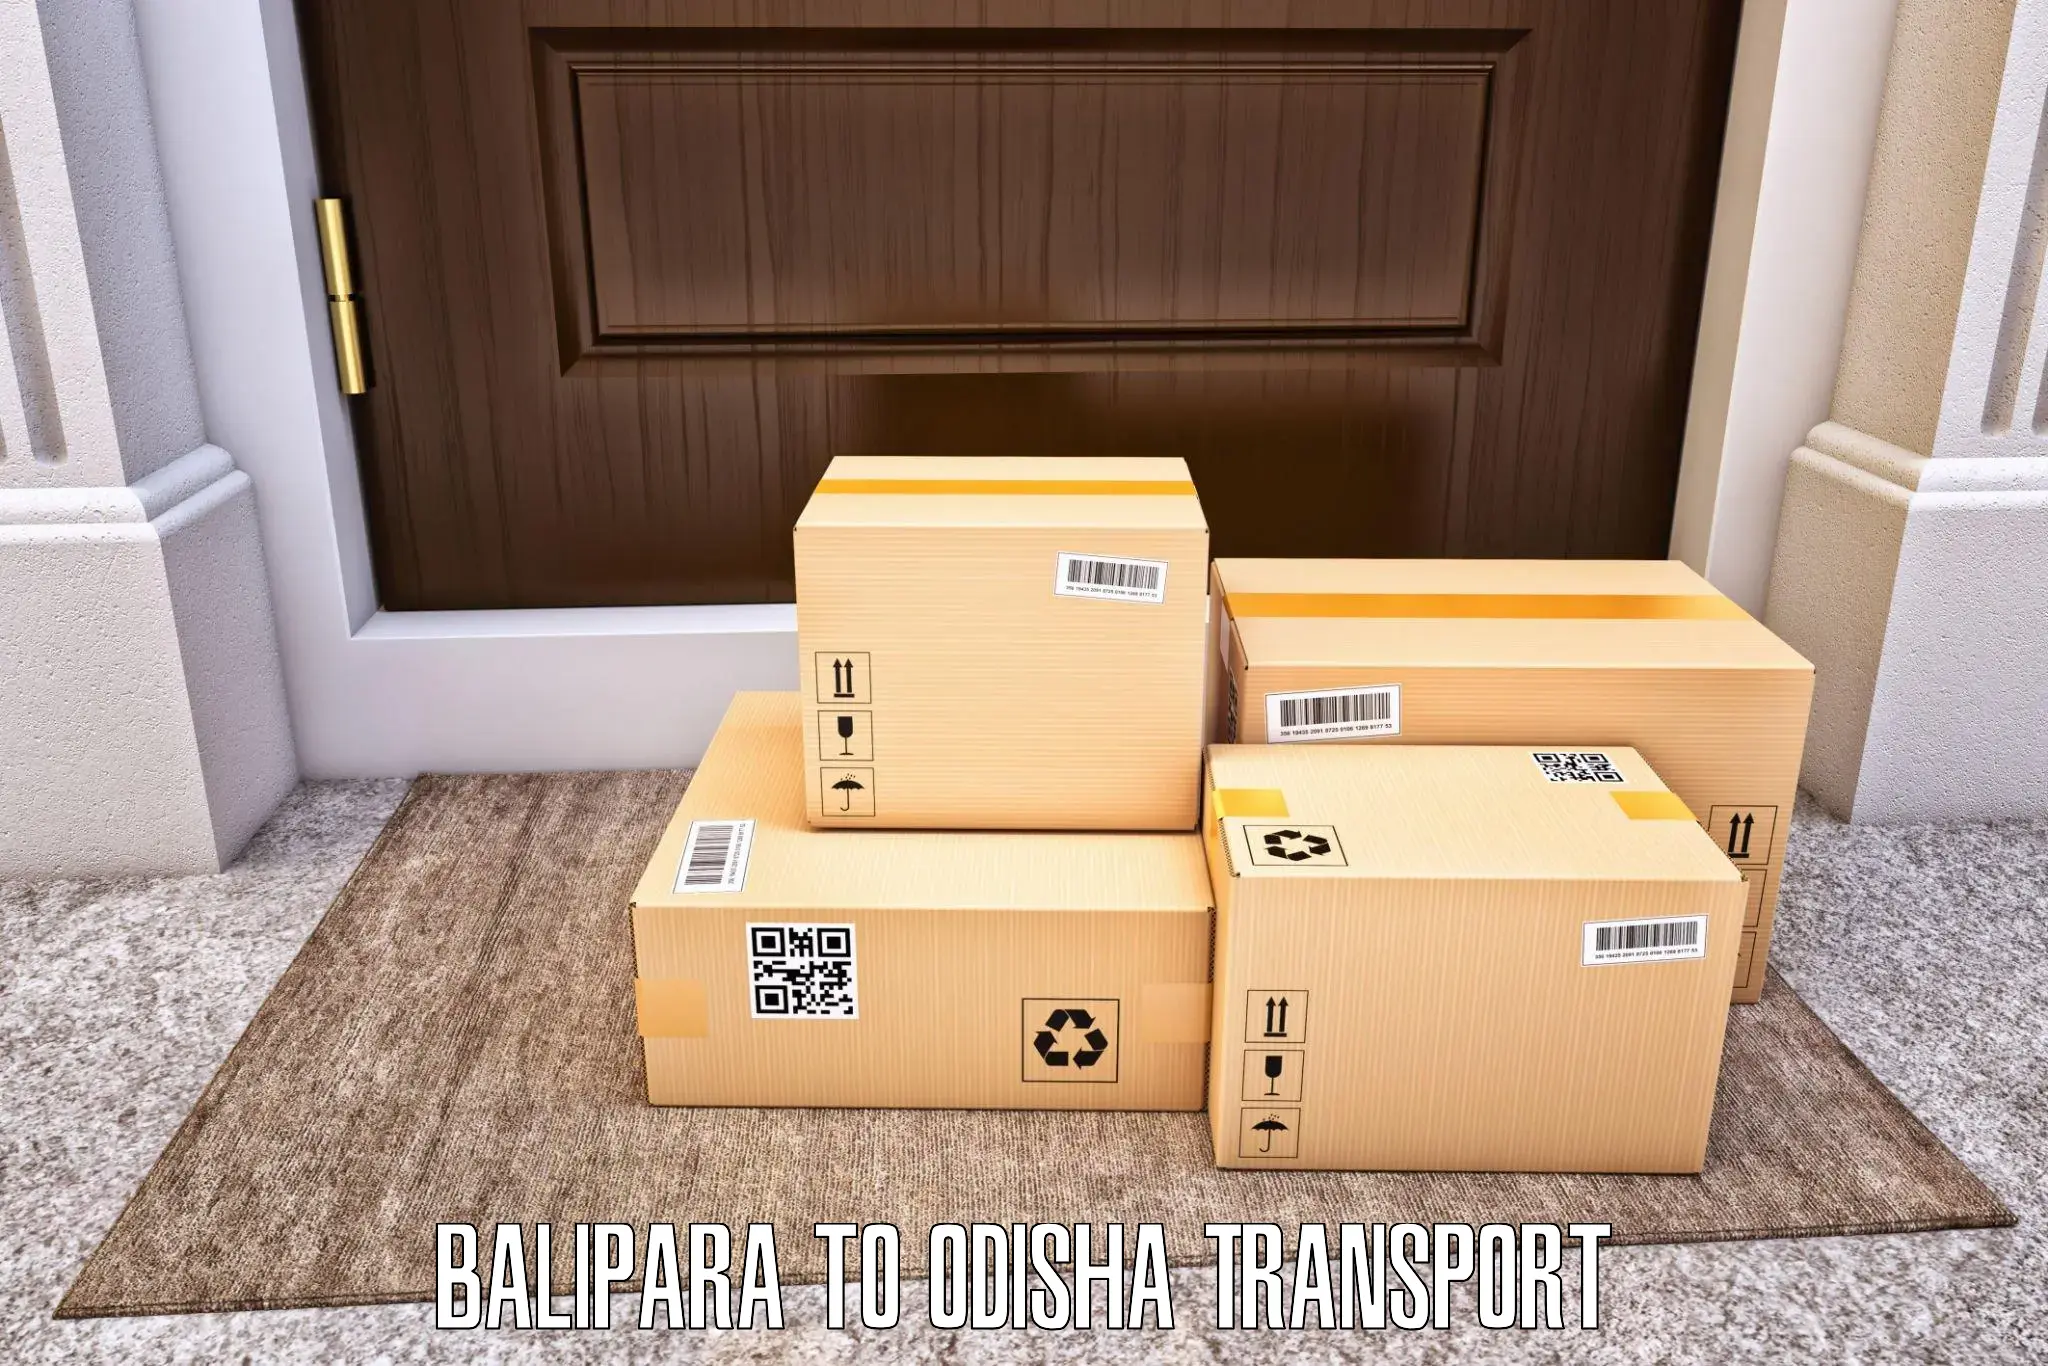 Scooty parcel Balipara to Balinga